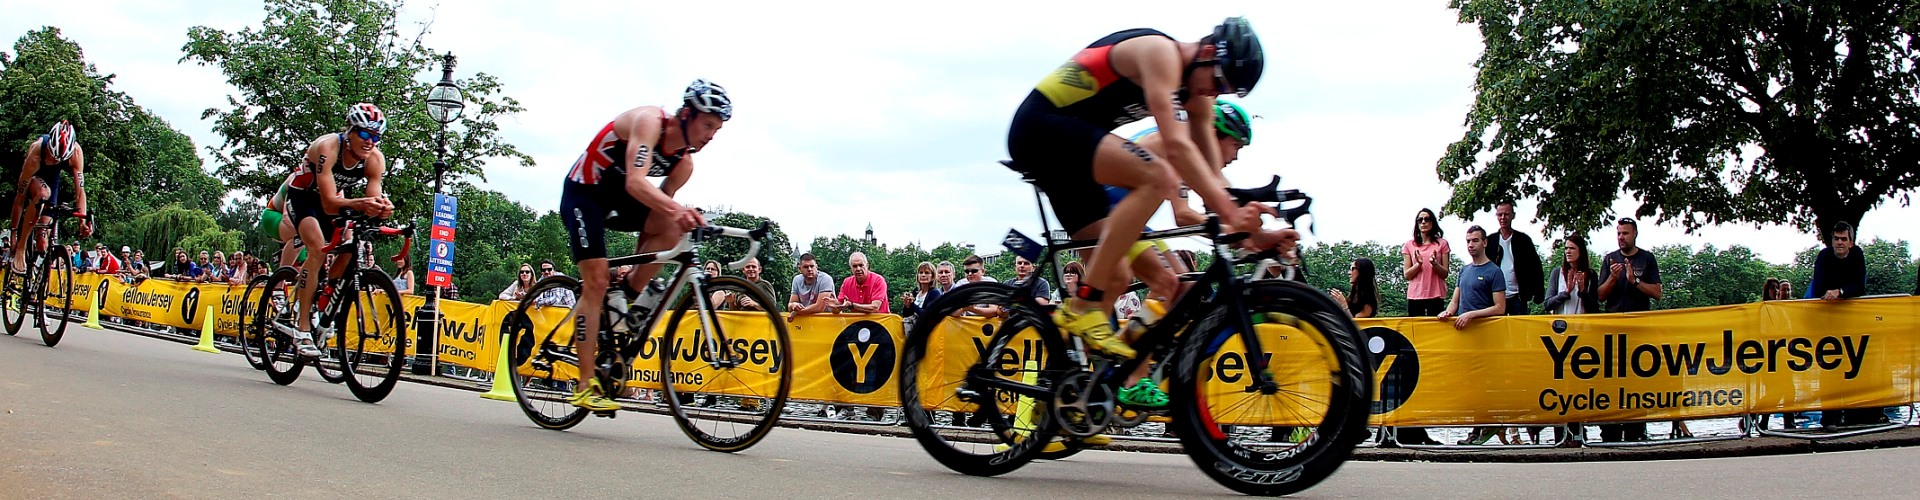 yellow-jersey-cycle-insurance-triathlon-insurance-race-hyde-park